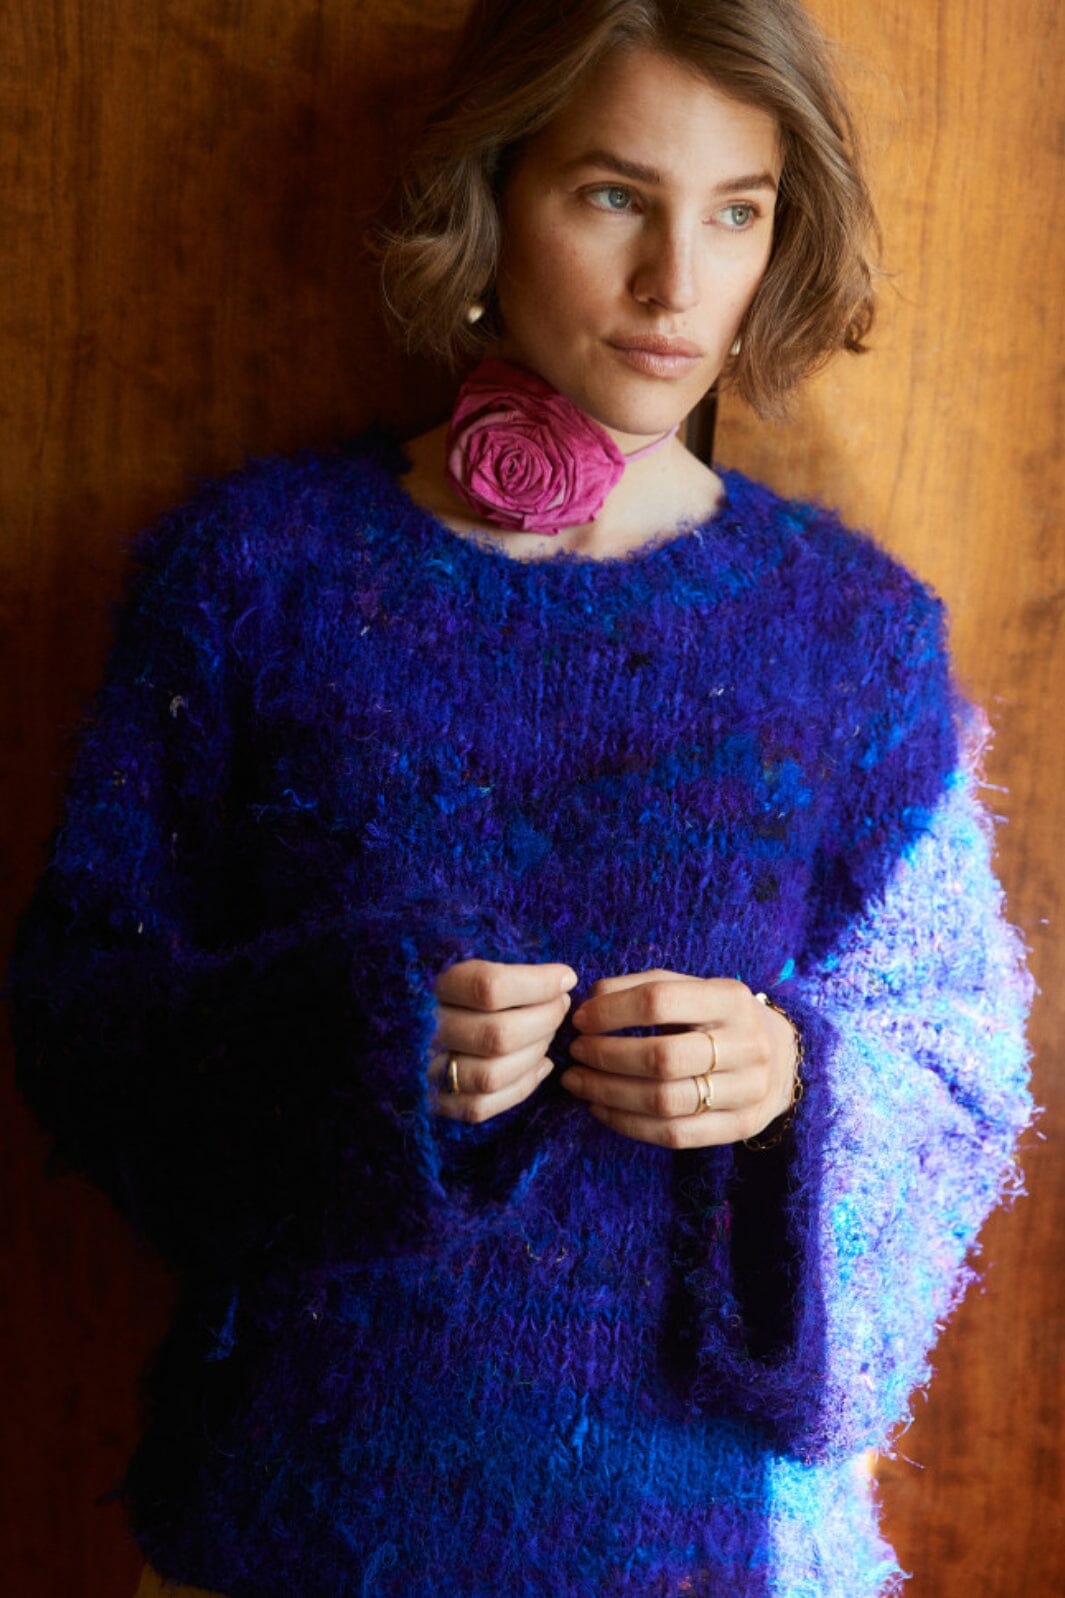 Sissel Edelbo - Karen Sari SILK Knit Sweater - Royal Blue Melange Strikbluser 